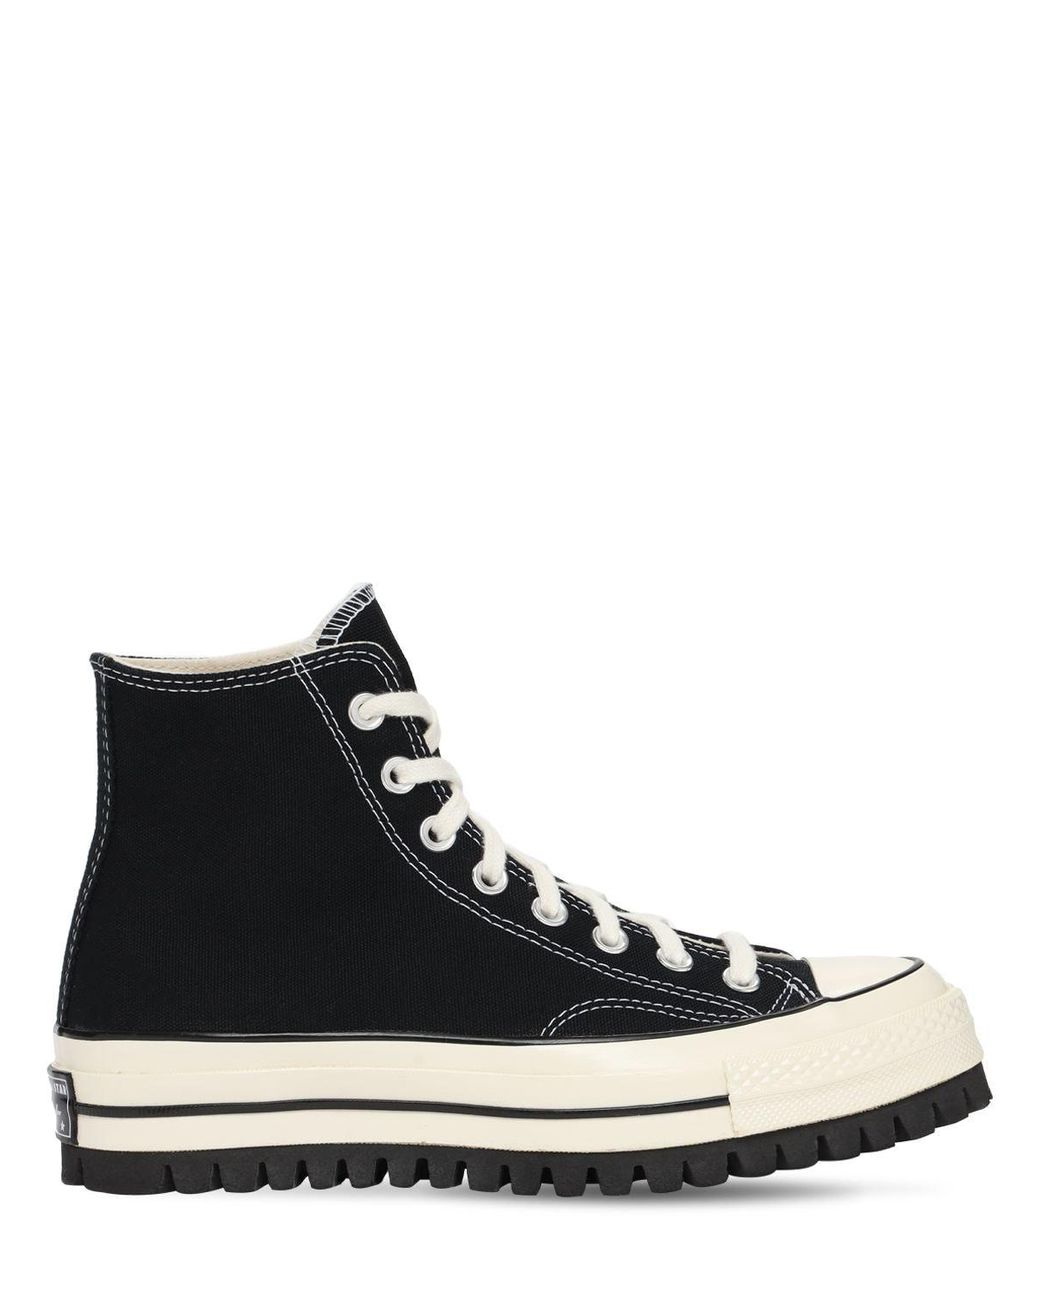 Converse Chuck 70 Trek Ltd Hi Sneakers in Black | Lyst